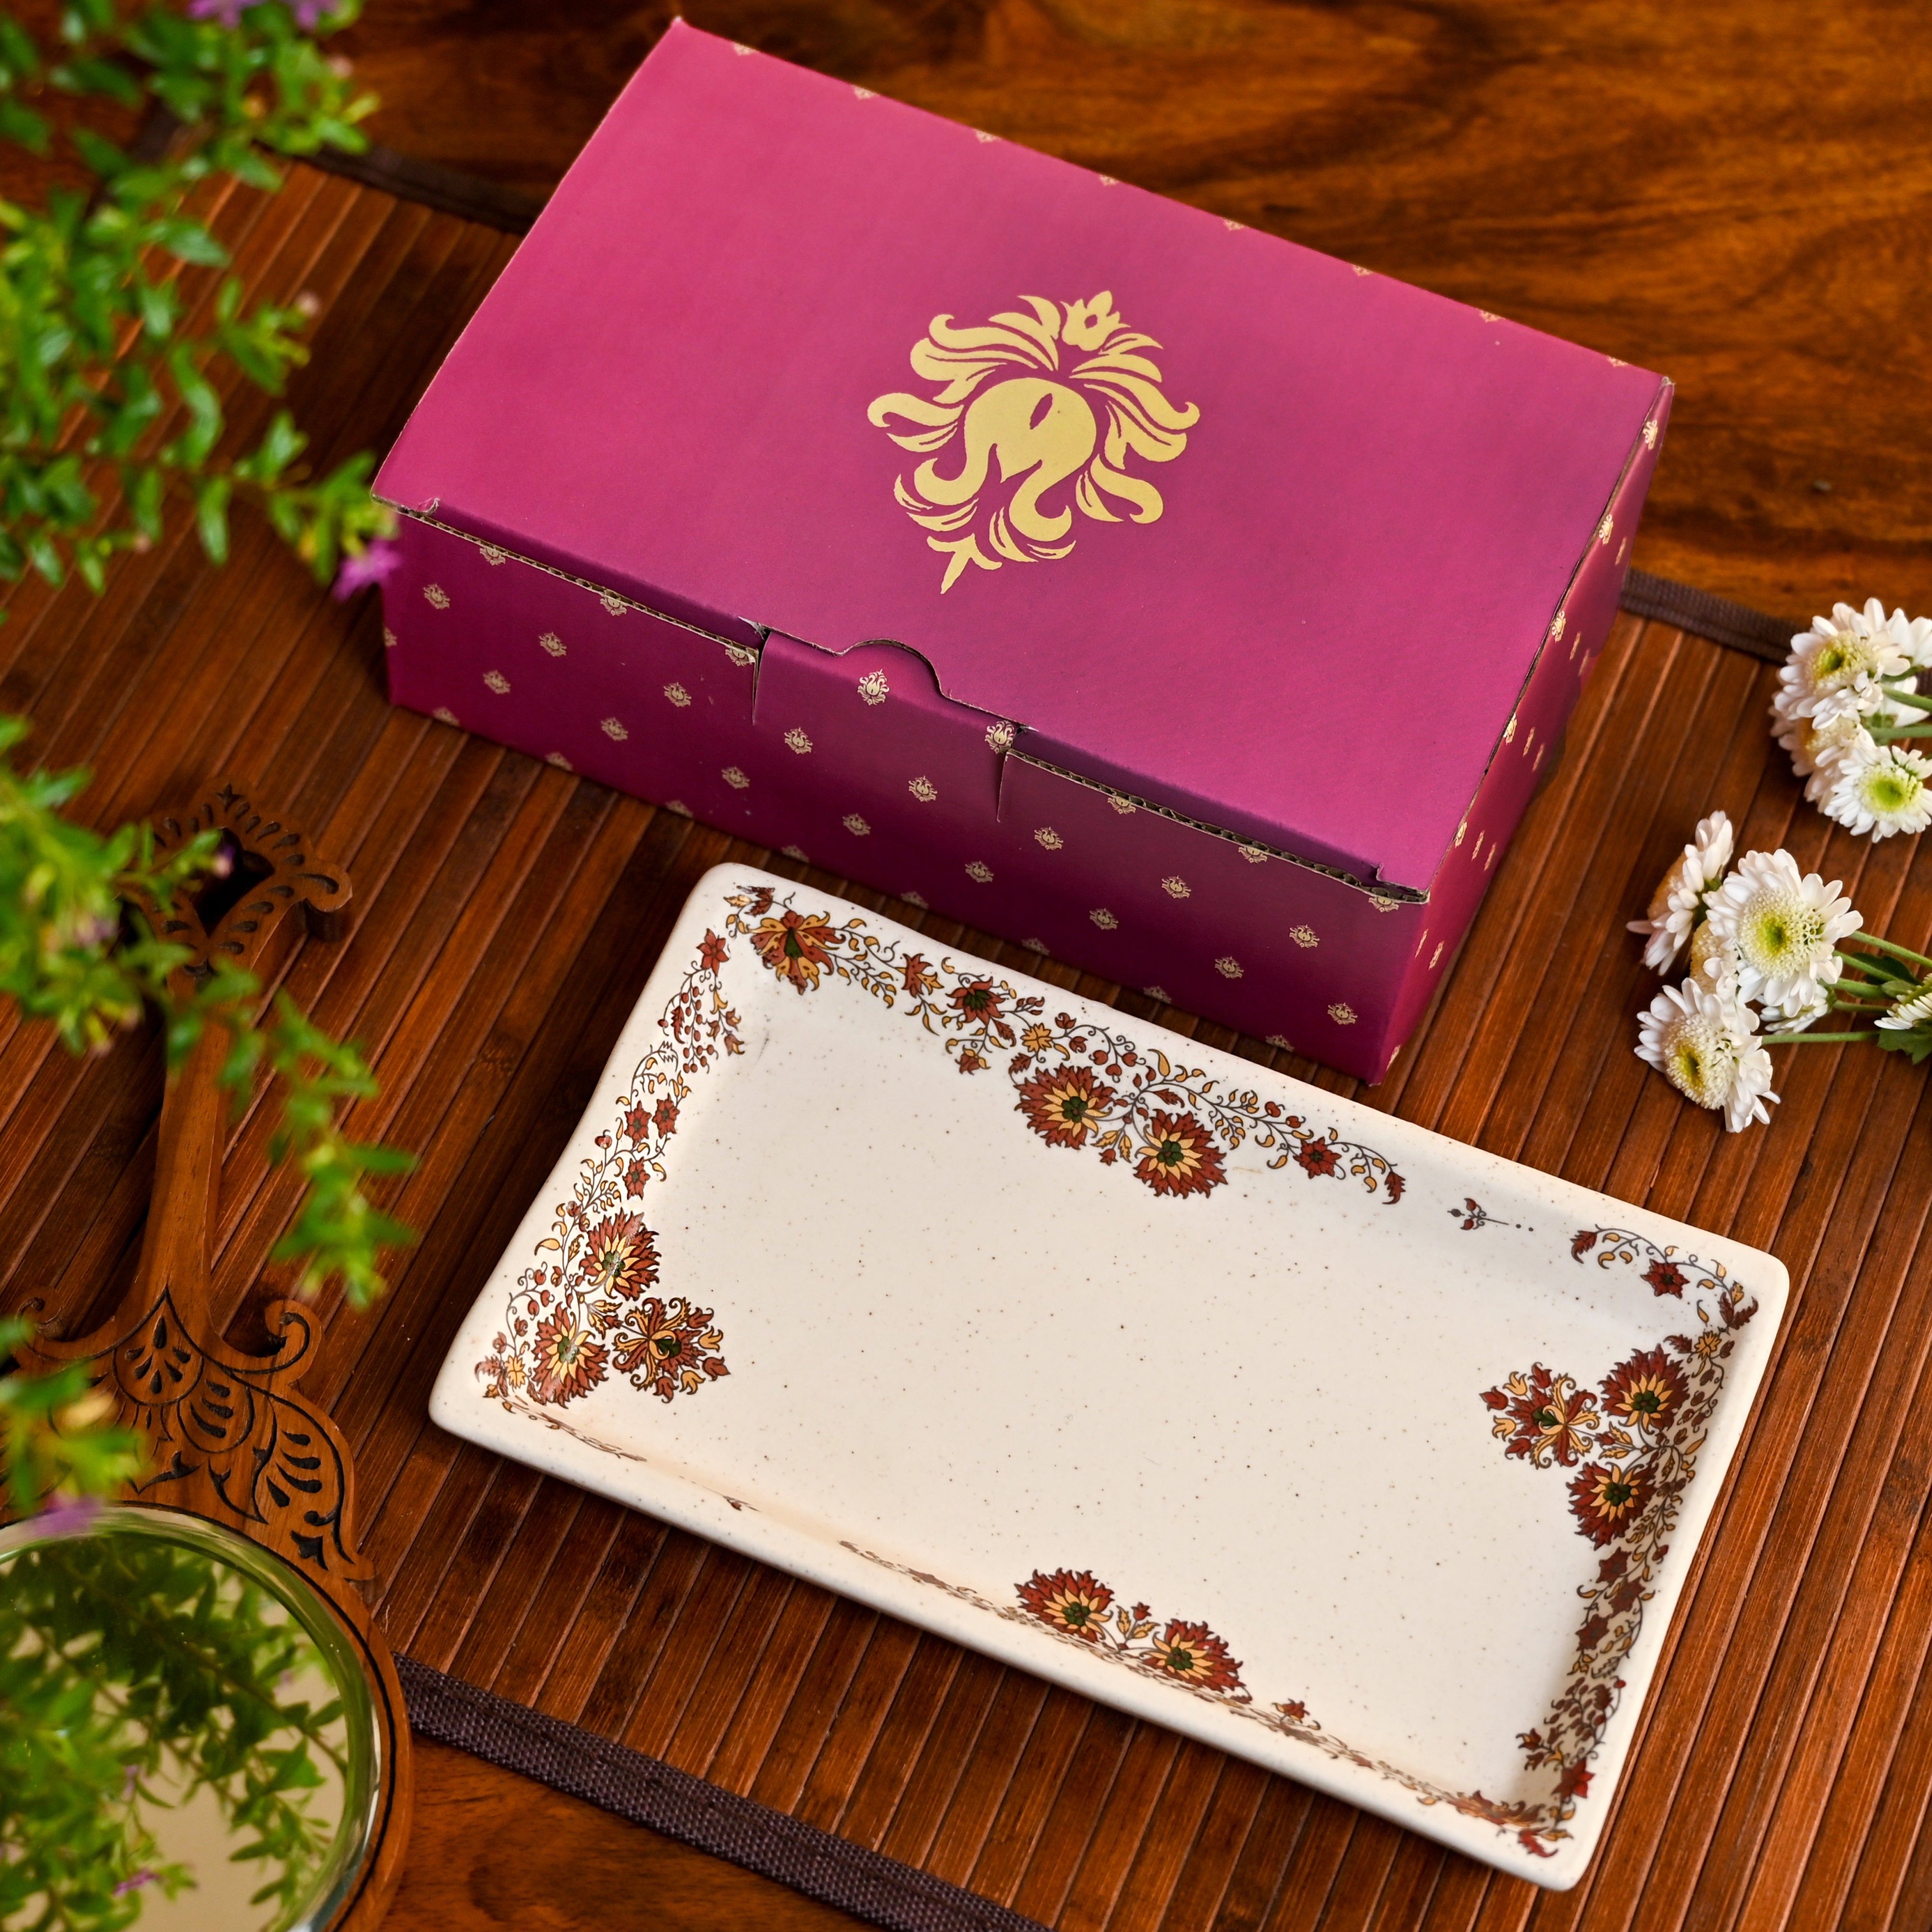 Exotic Diwali Delicacies in Diwali Gift Box